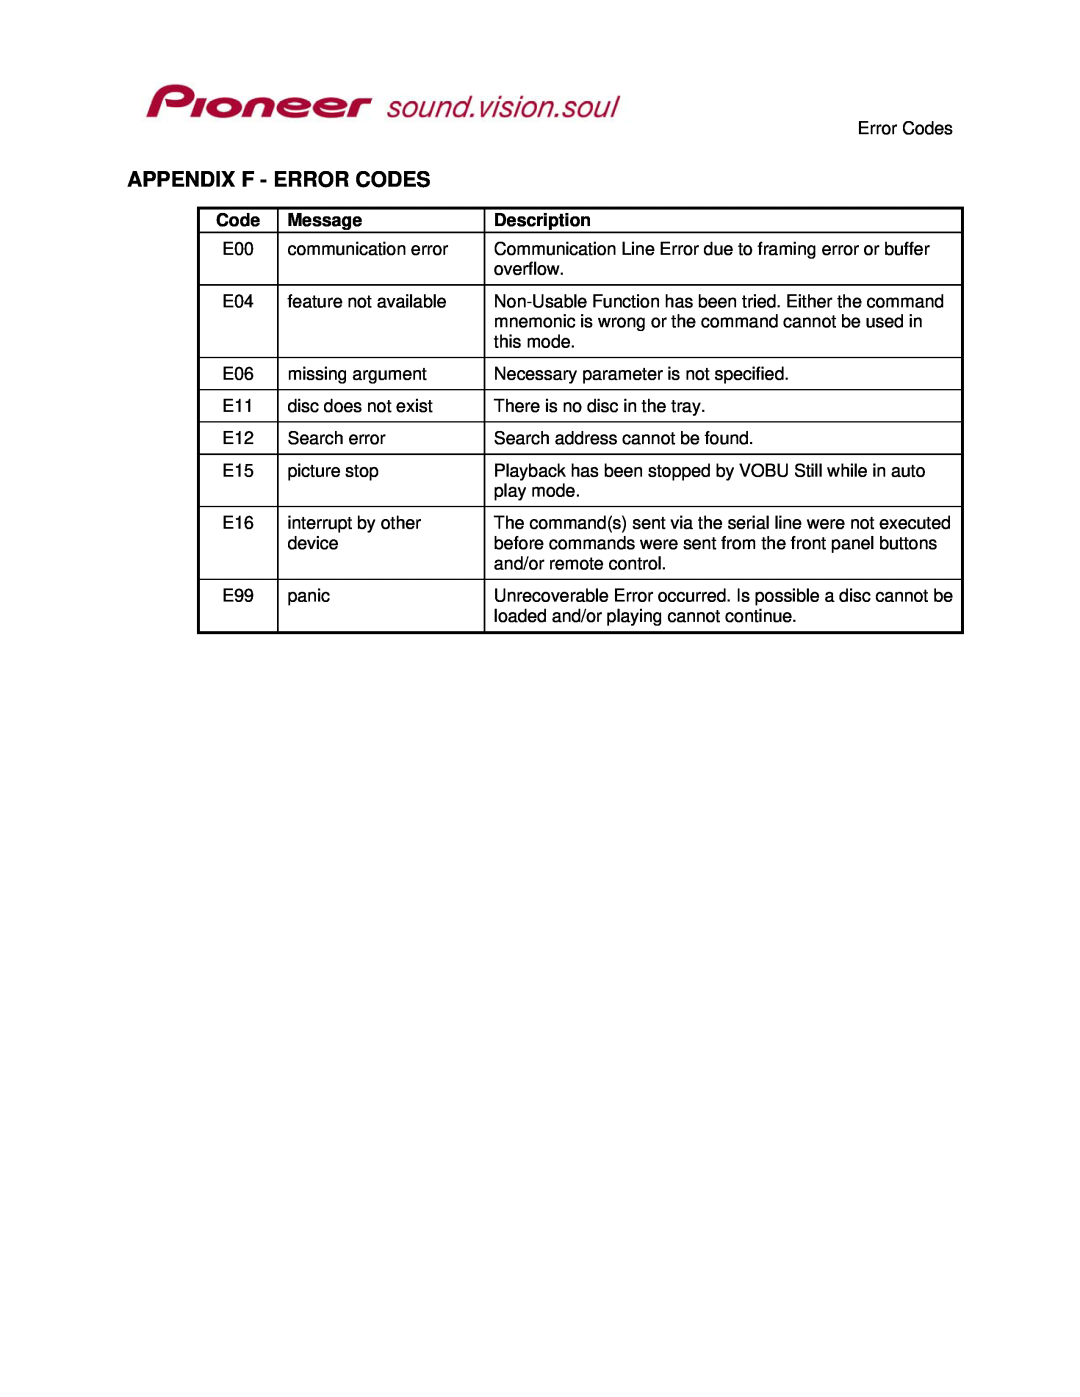 Pioneer RS-232C manual Appendix F - Error Codes, Message, Description 